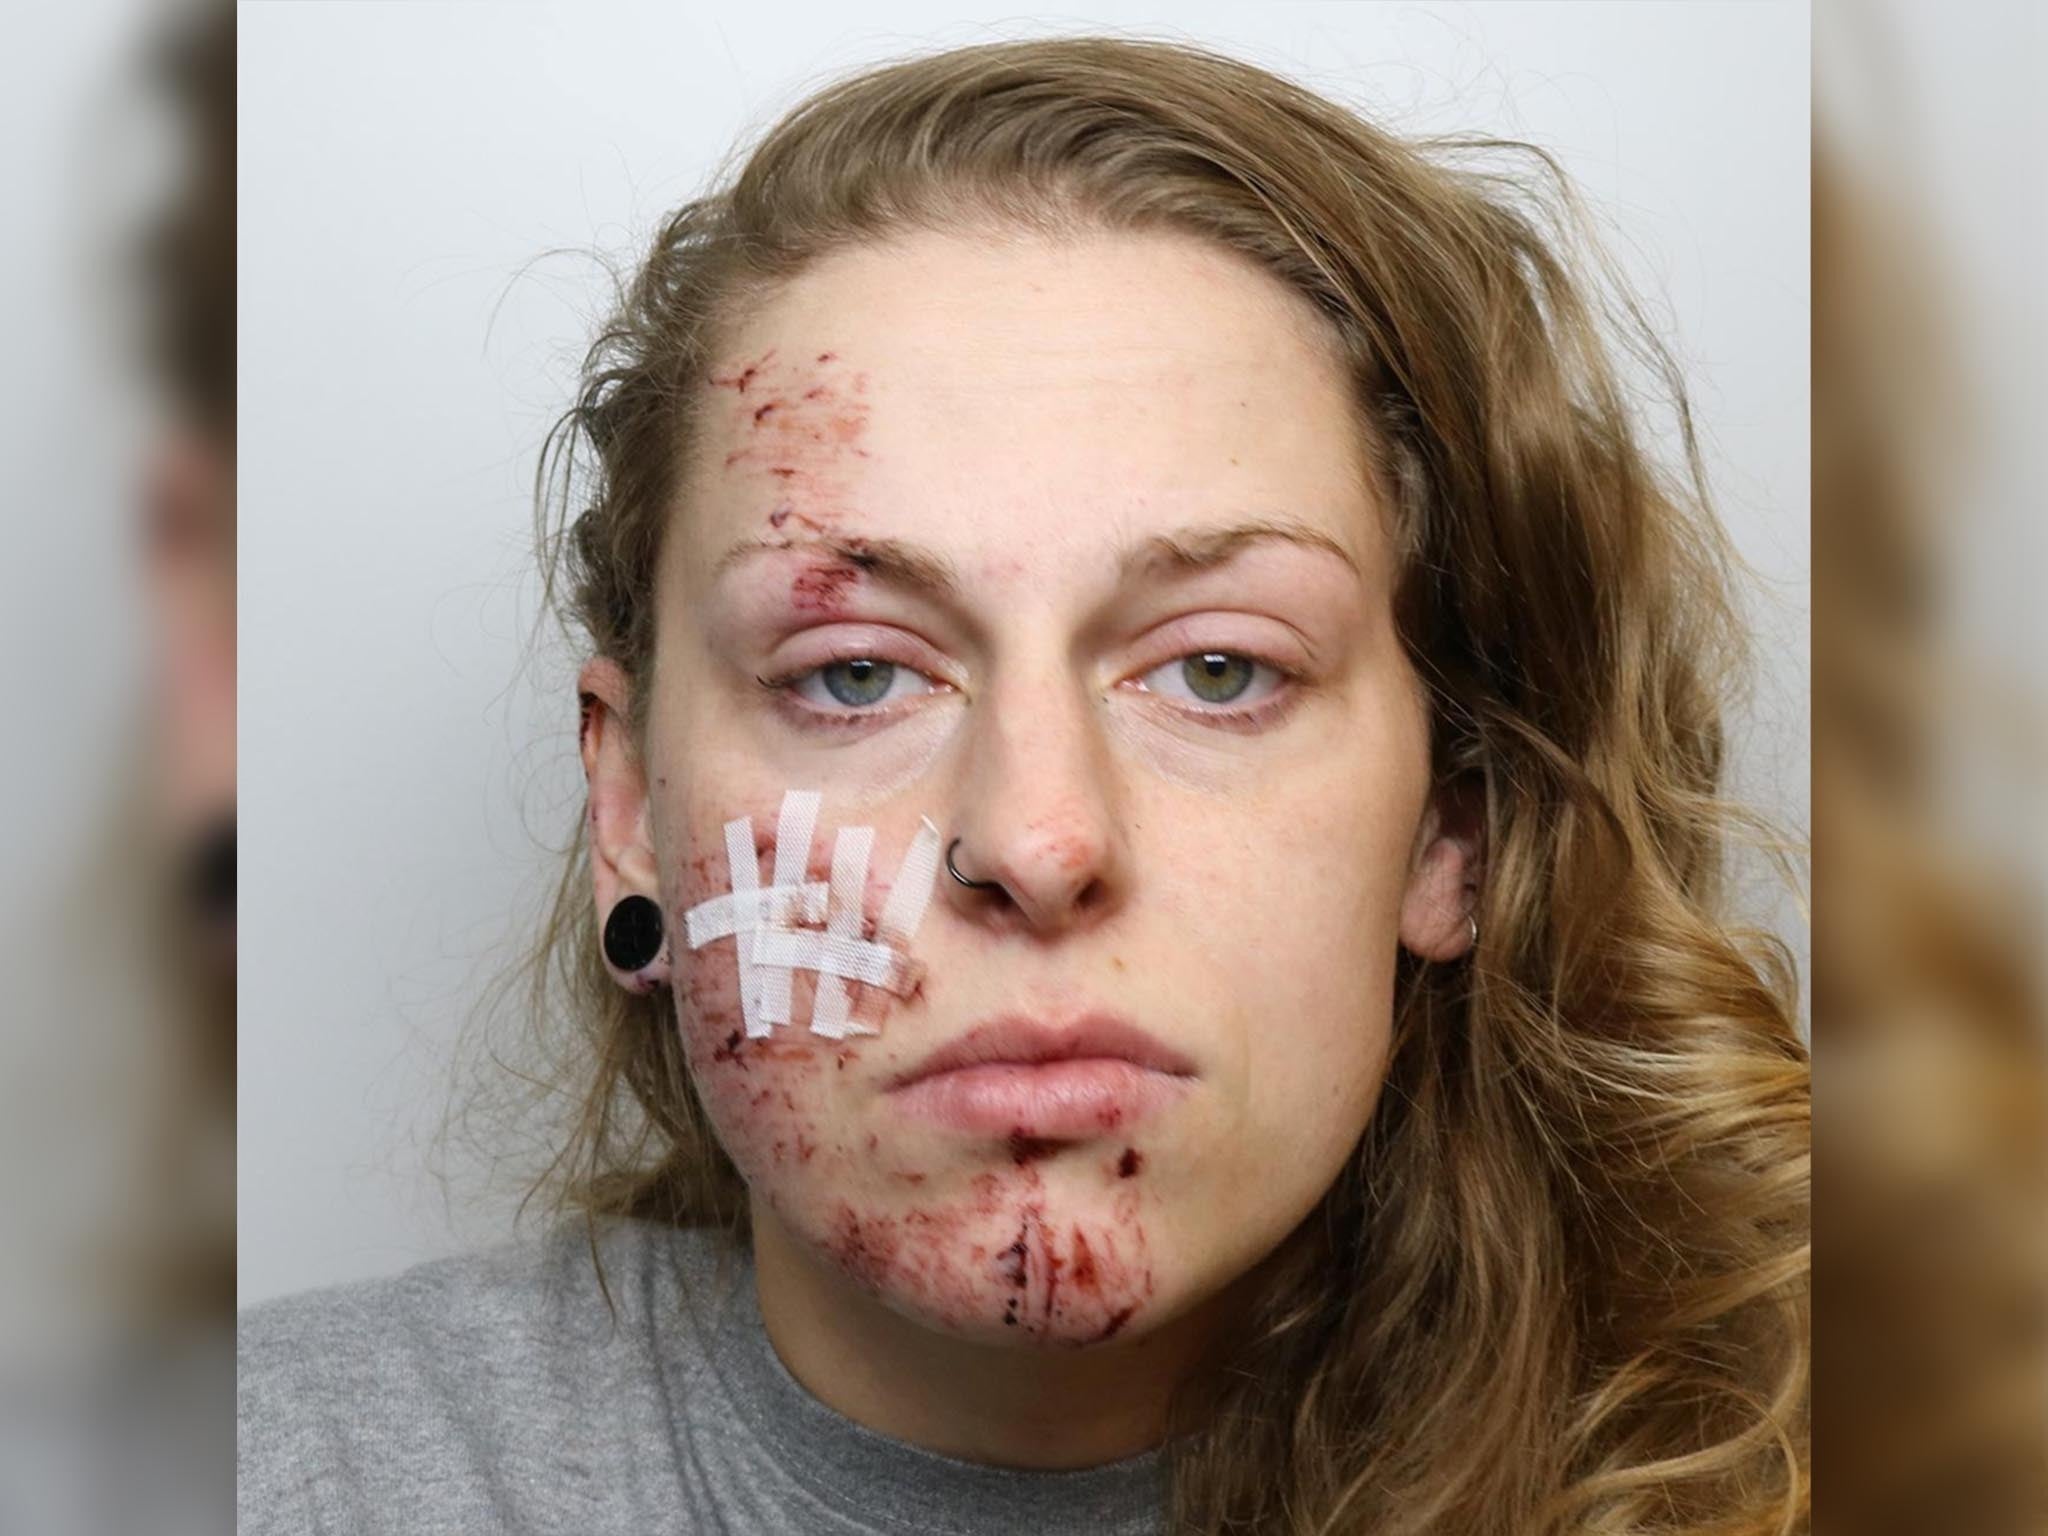 Karolina Serafin suffered minor facial injuries in the crash which left three pedestrians severely hurt